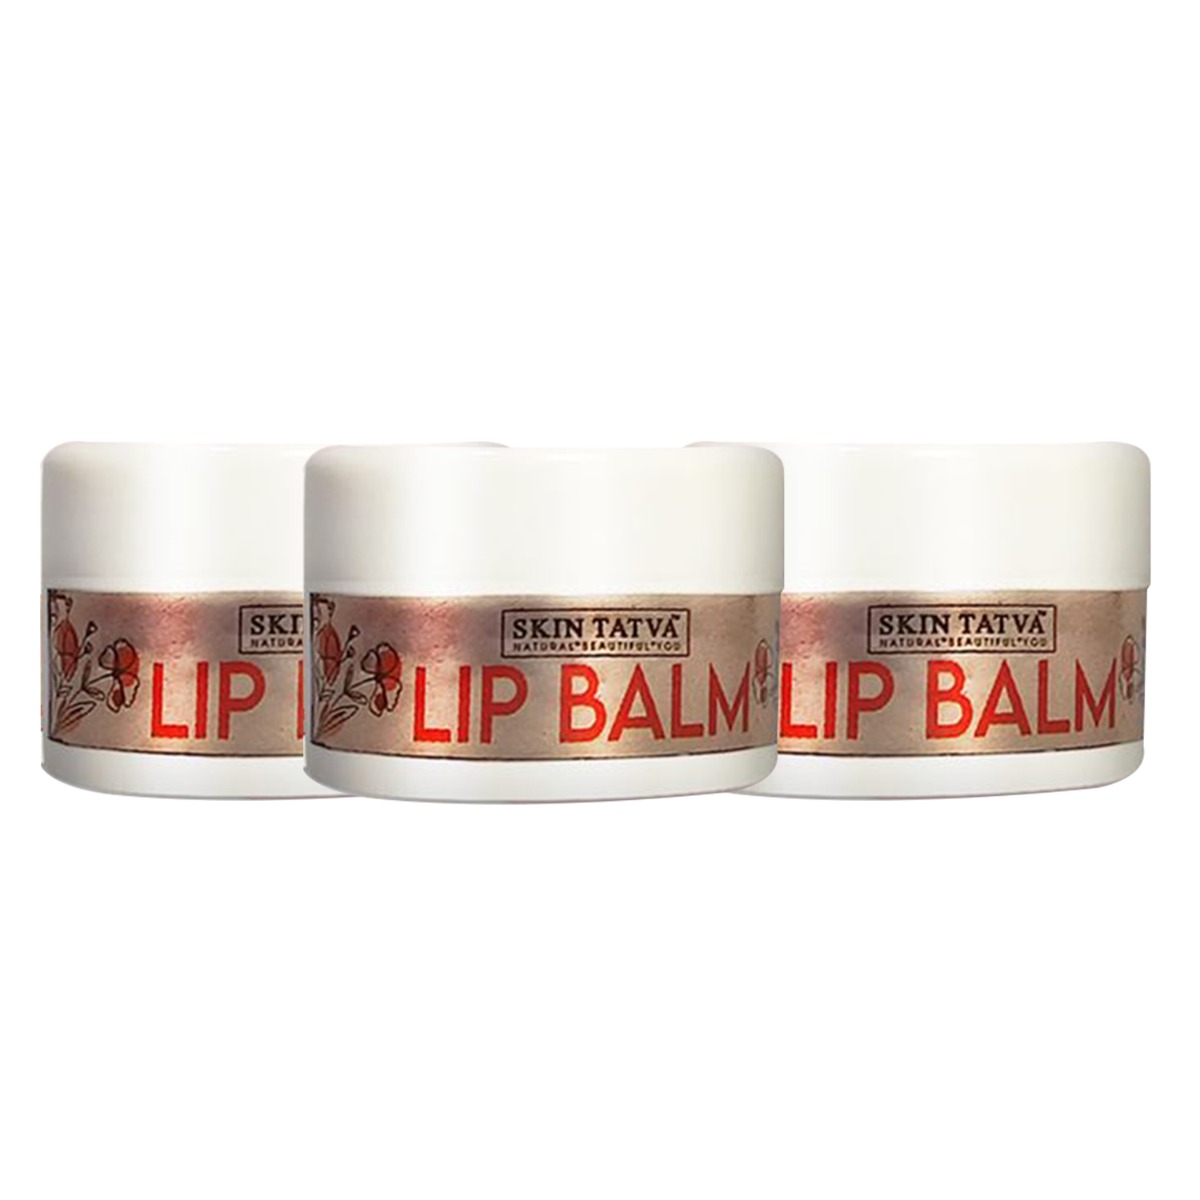 Skin Tatva Avocado Lip Balm - Pack Of 3, 18.78gm each